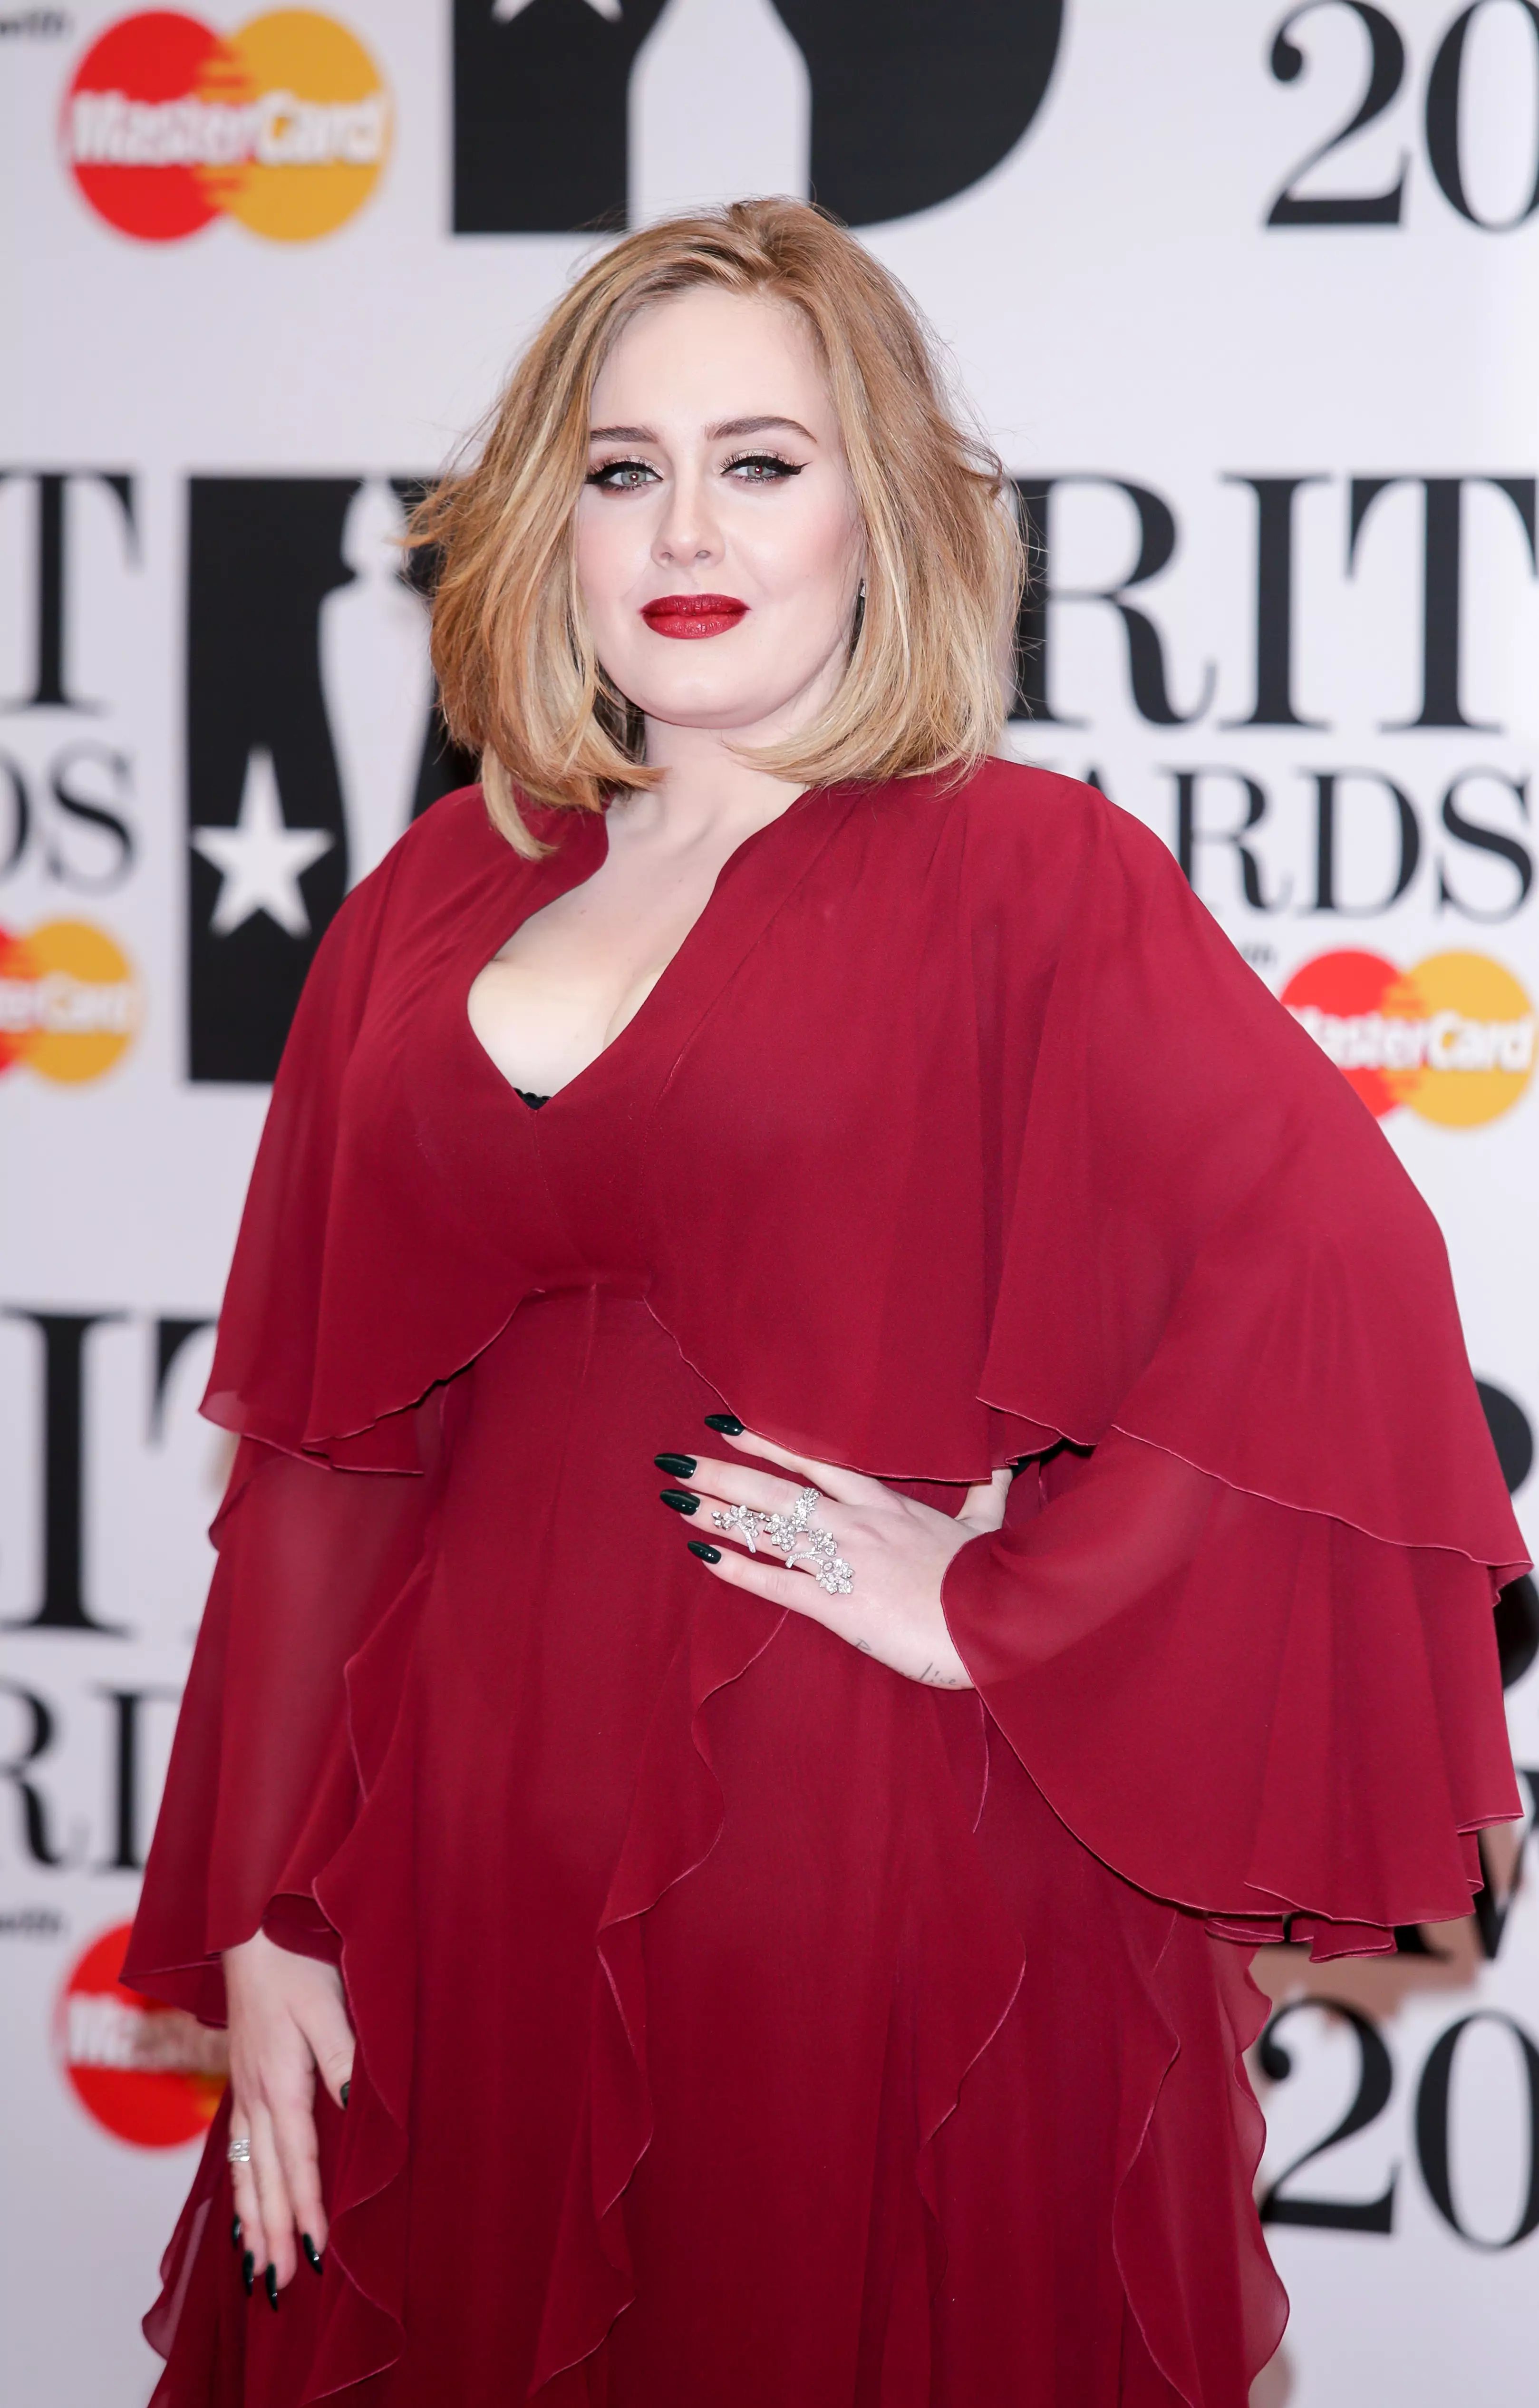 Adele back in 2016 at the BRIT awards.